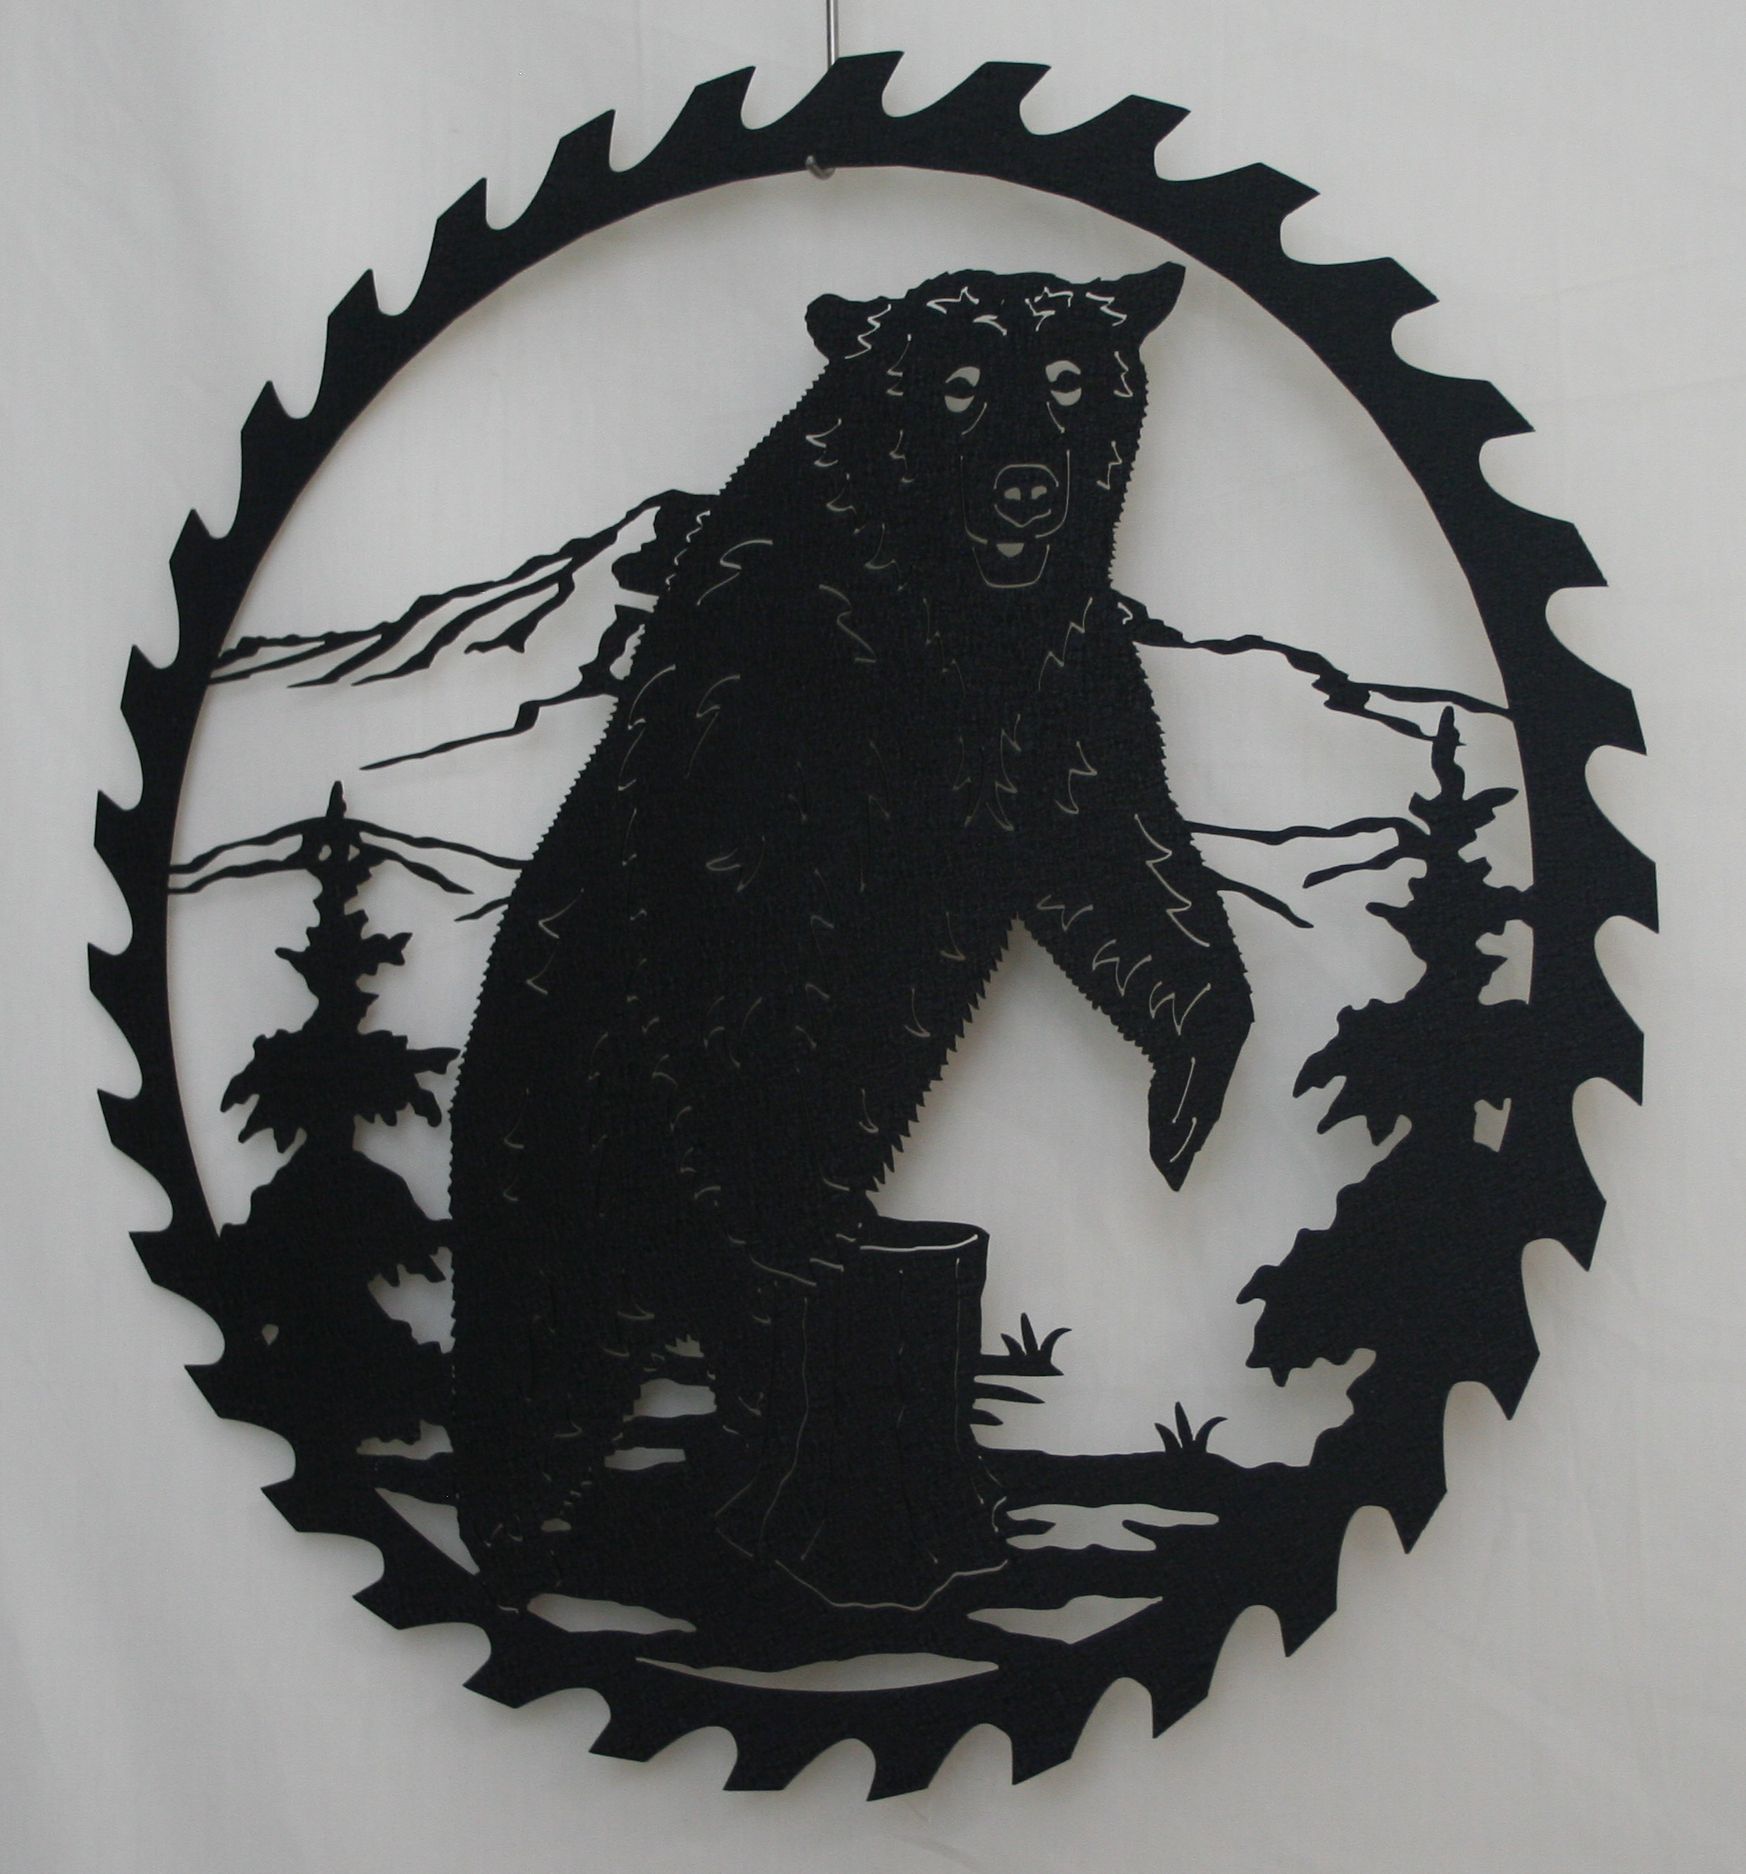 Metal Art, Round, Saw, Blade, Bear, Trees, Woods, Mountains, Hills, Tree Stump, Grass